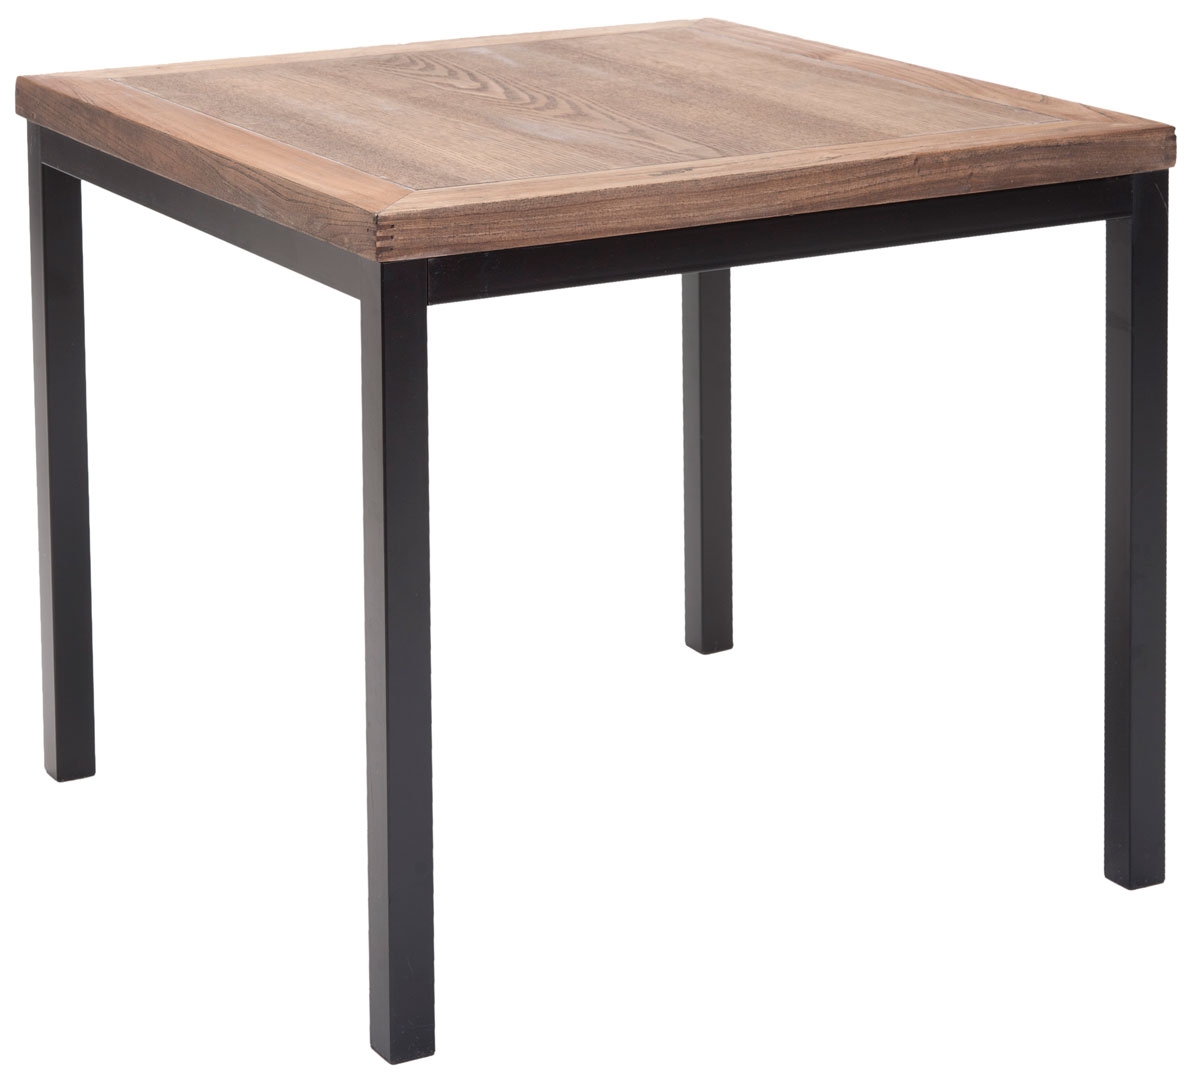 Milo Side Table - Image 1